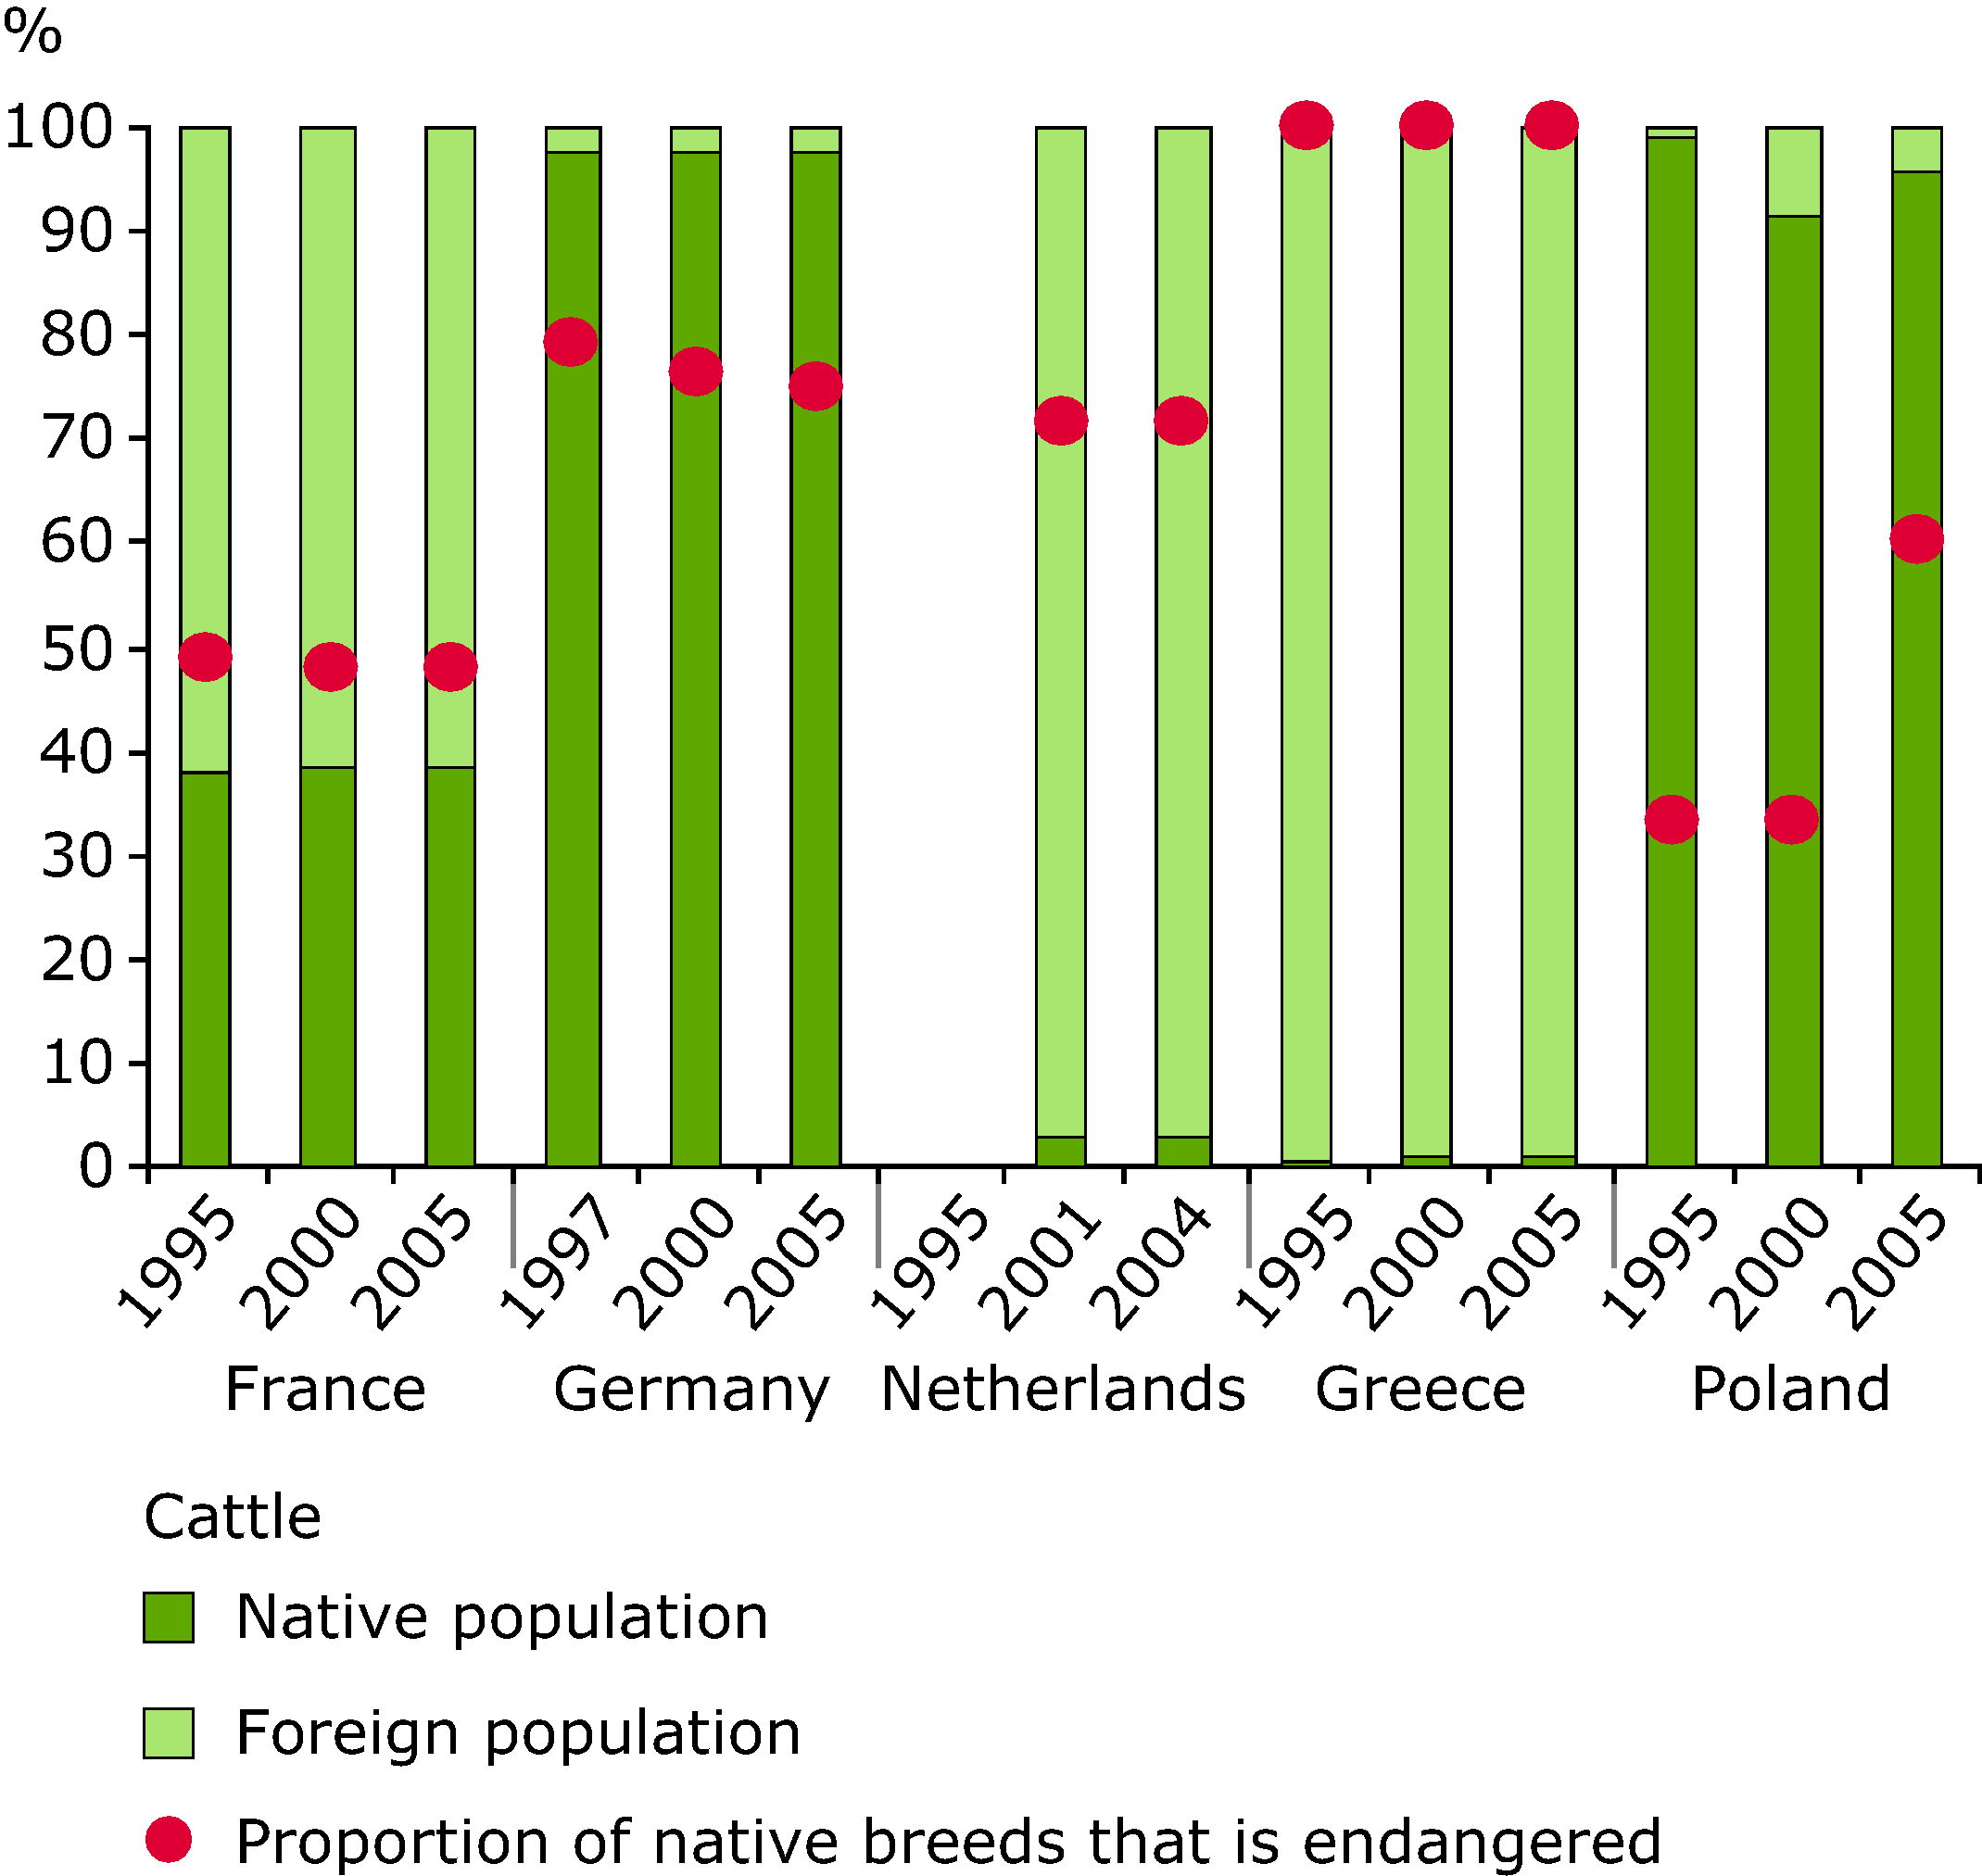 Evolution of native population sizes and endangered breeds (cattle)